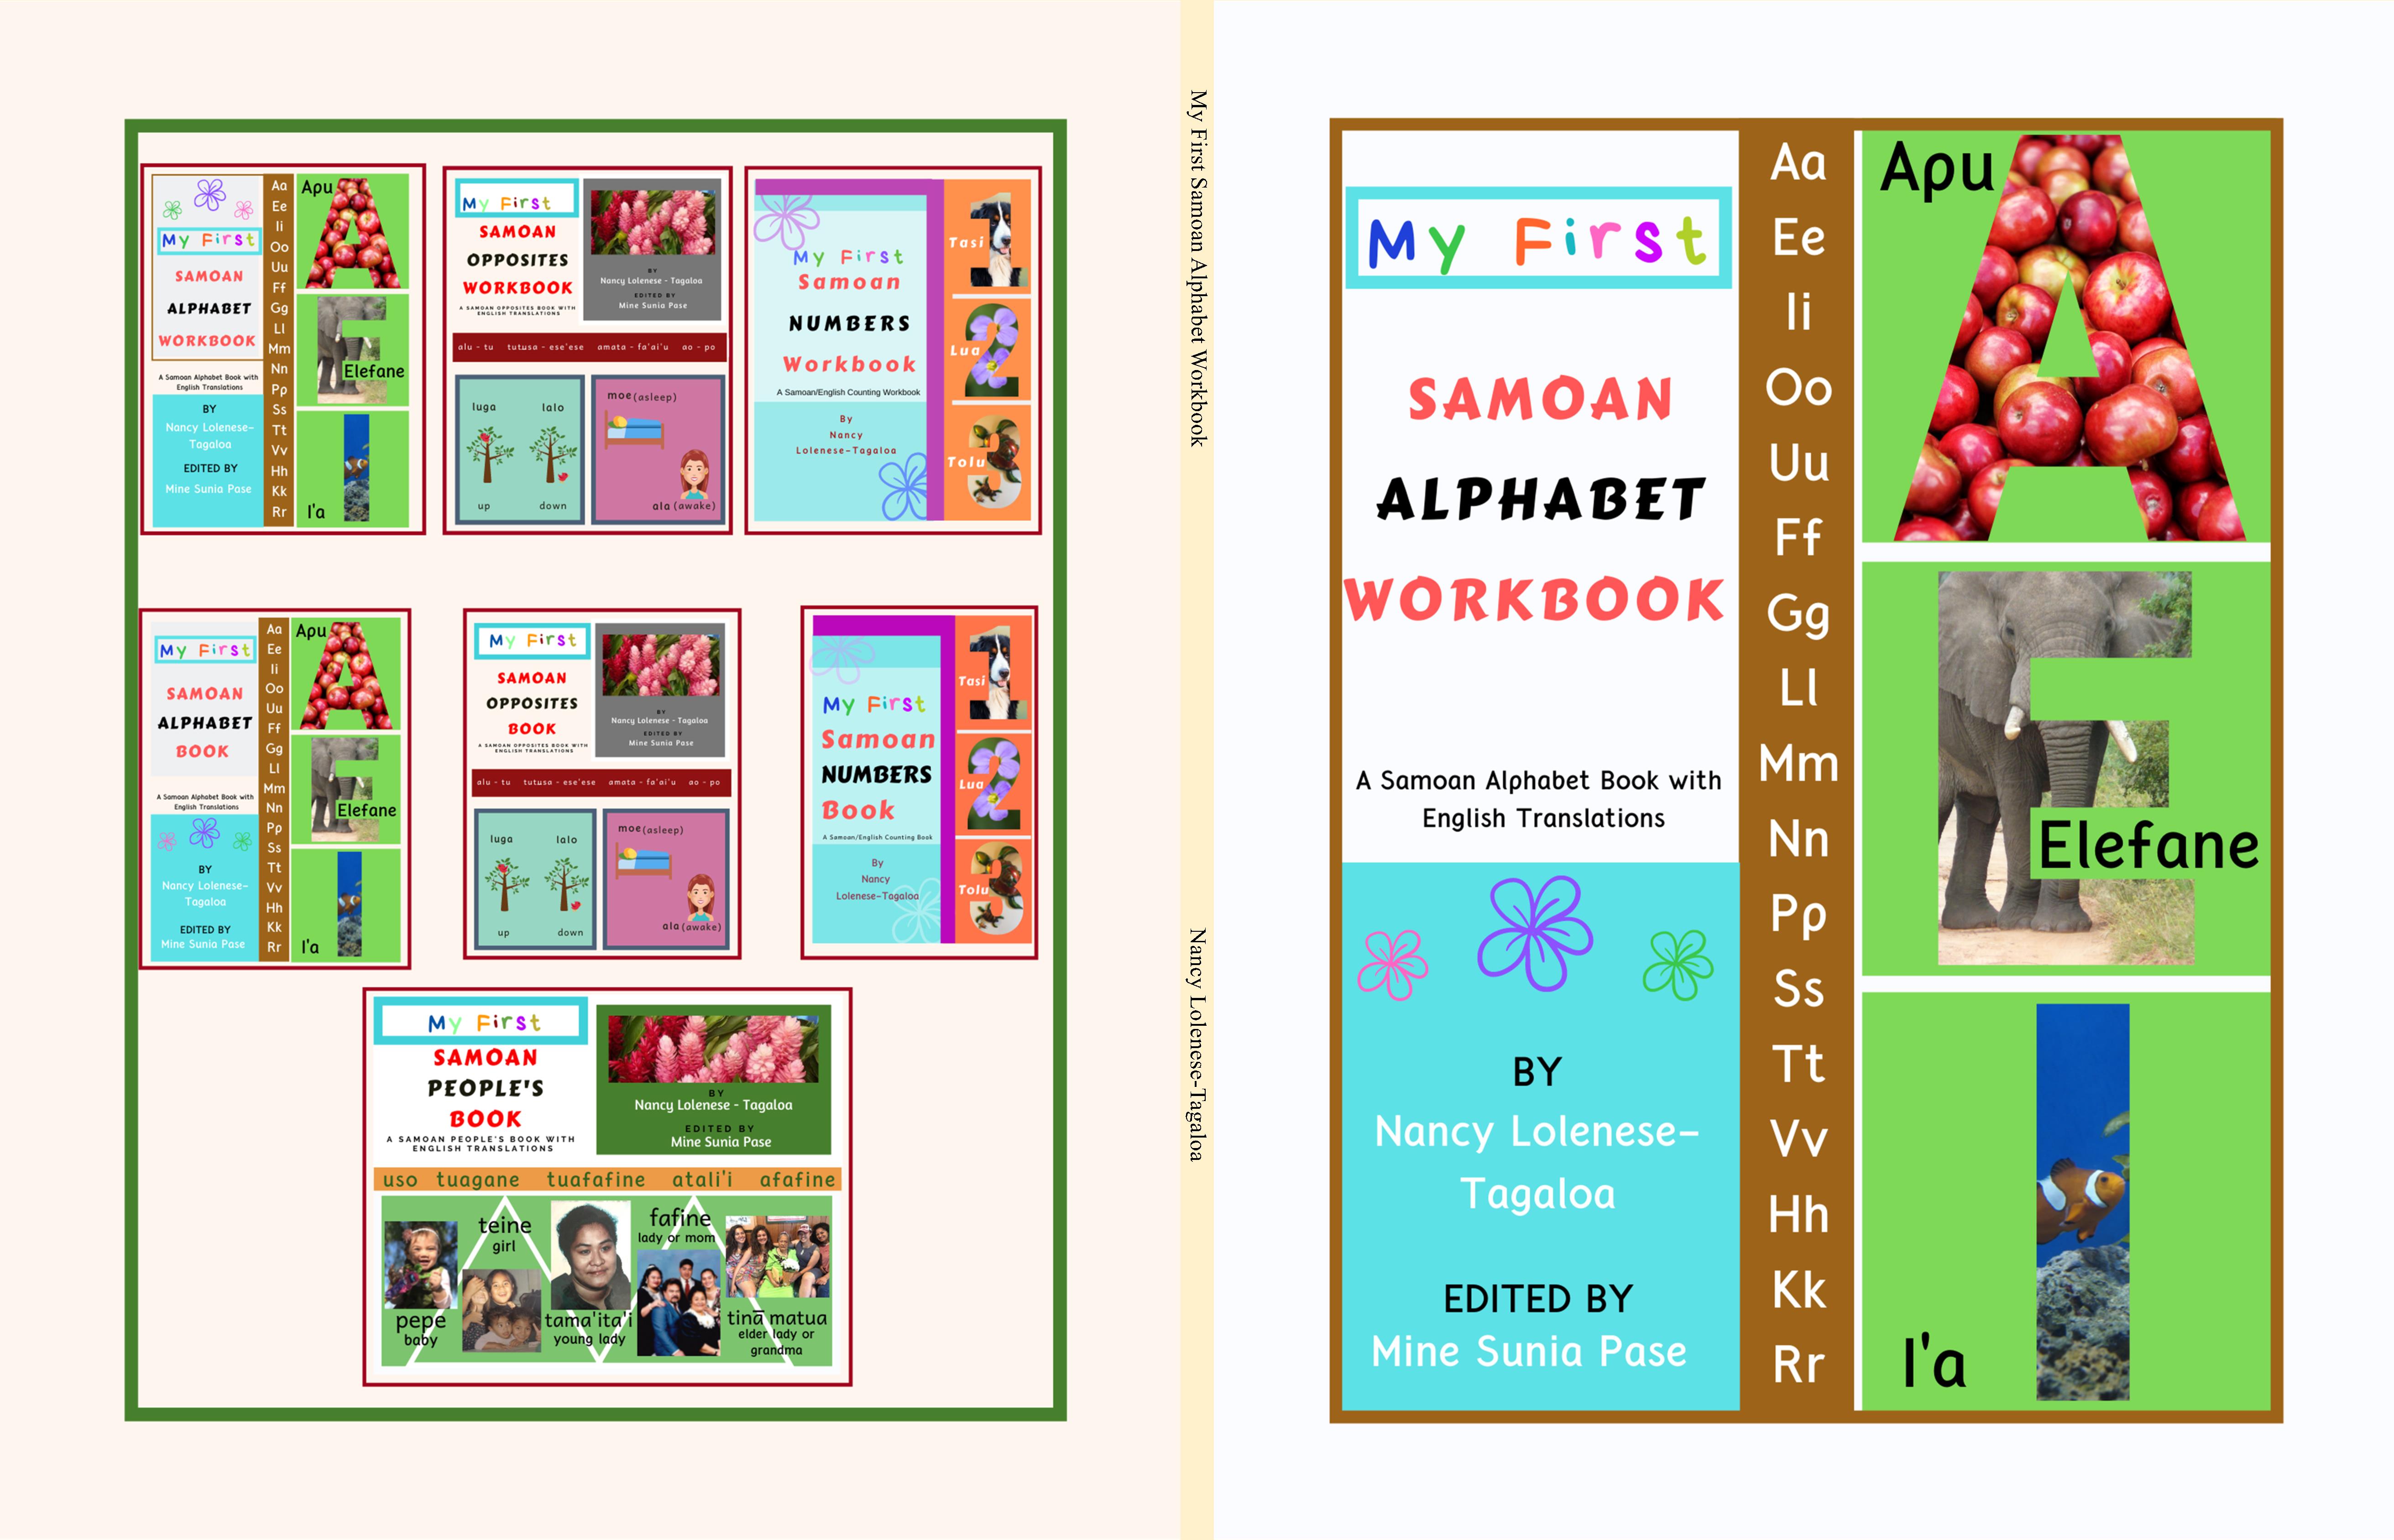 My First Samoan Alphabet Workbook  cover image